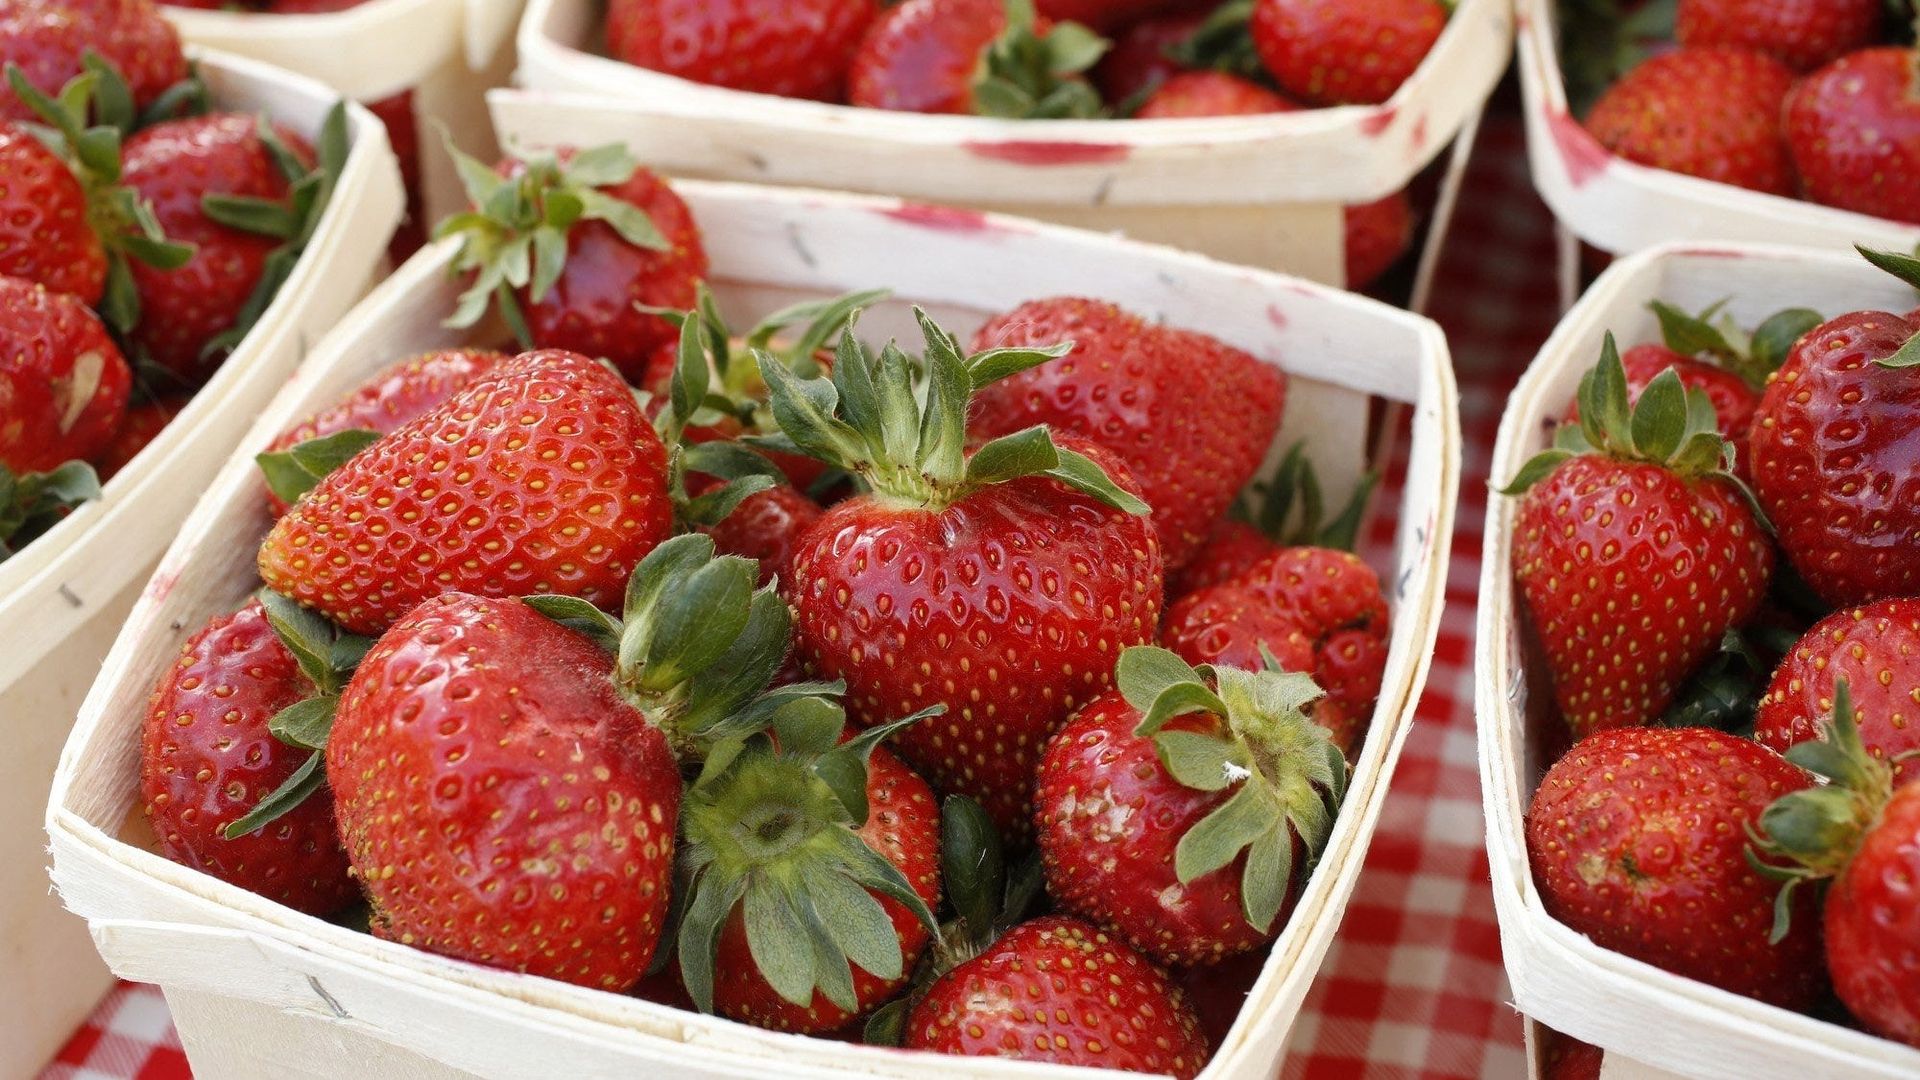 A basket of fresh strawberries.